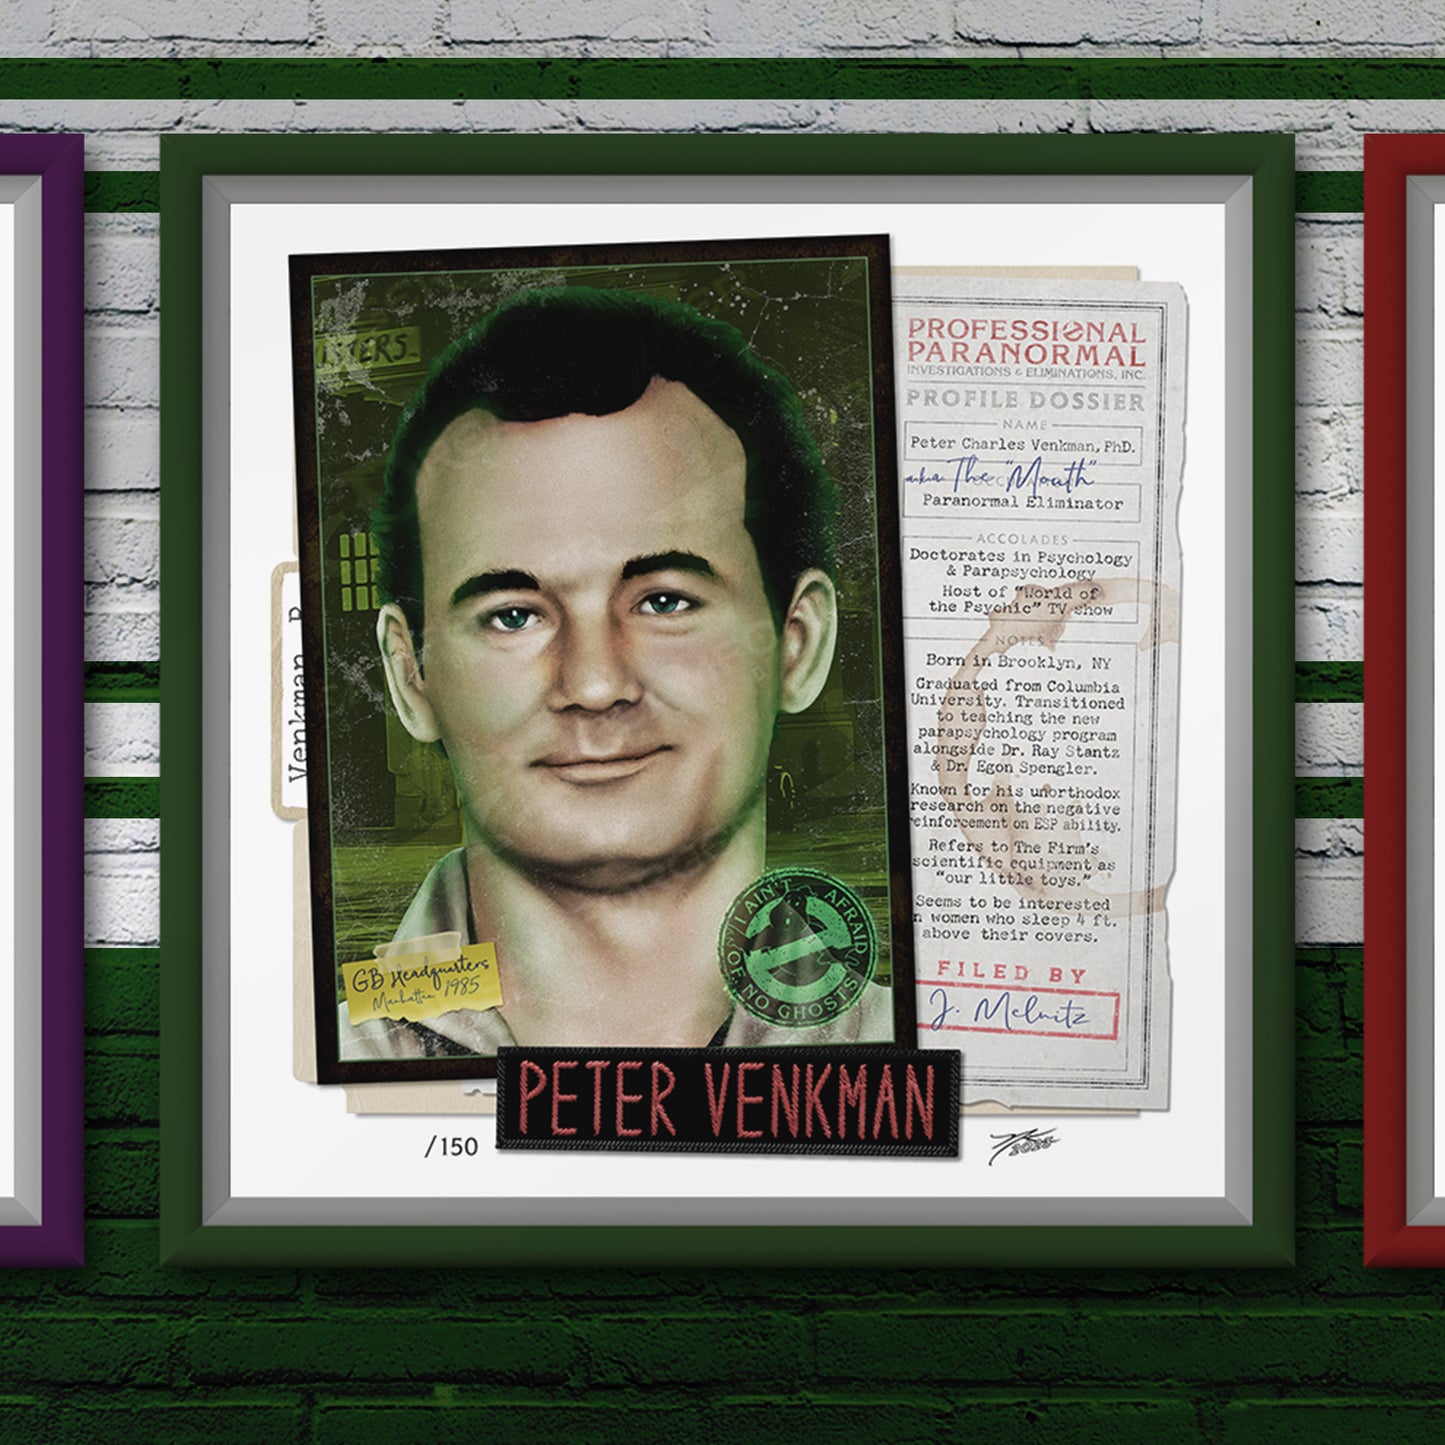 "Dr. Peter Venkman" Portrait Art Mini-Print • Run of 150